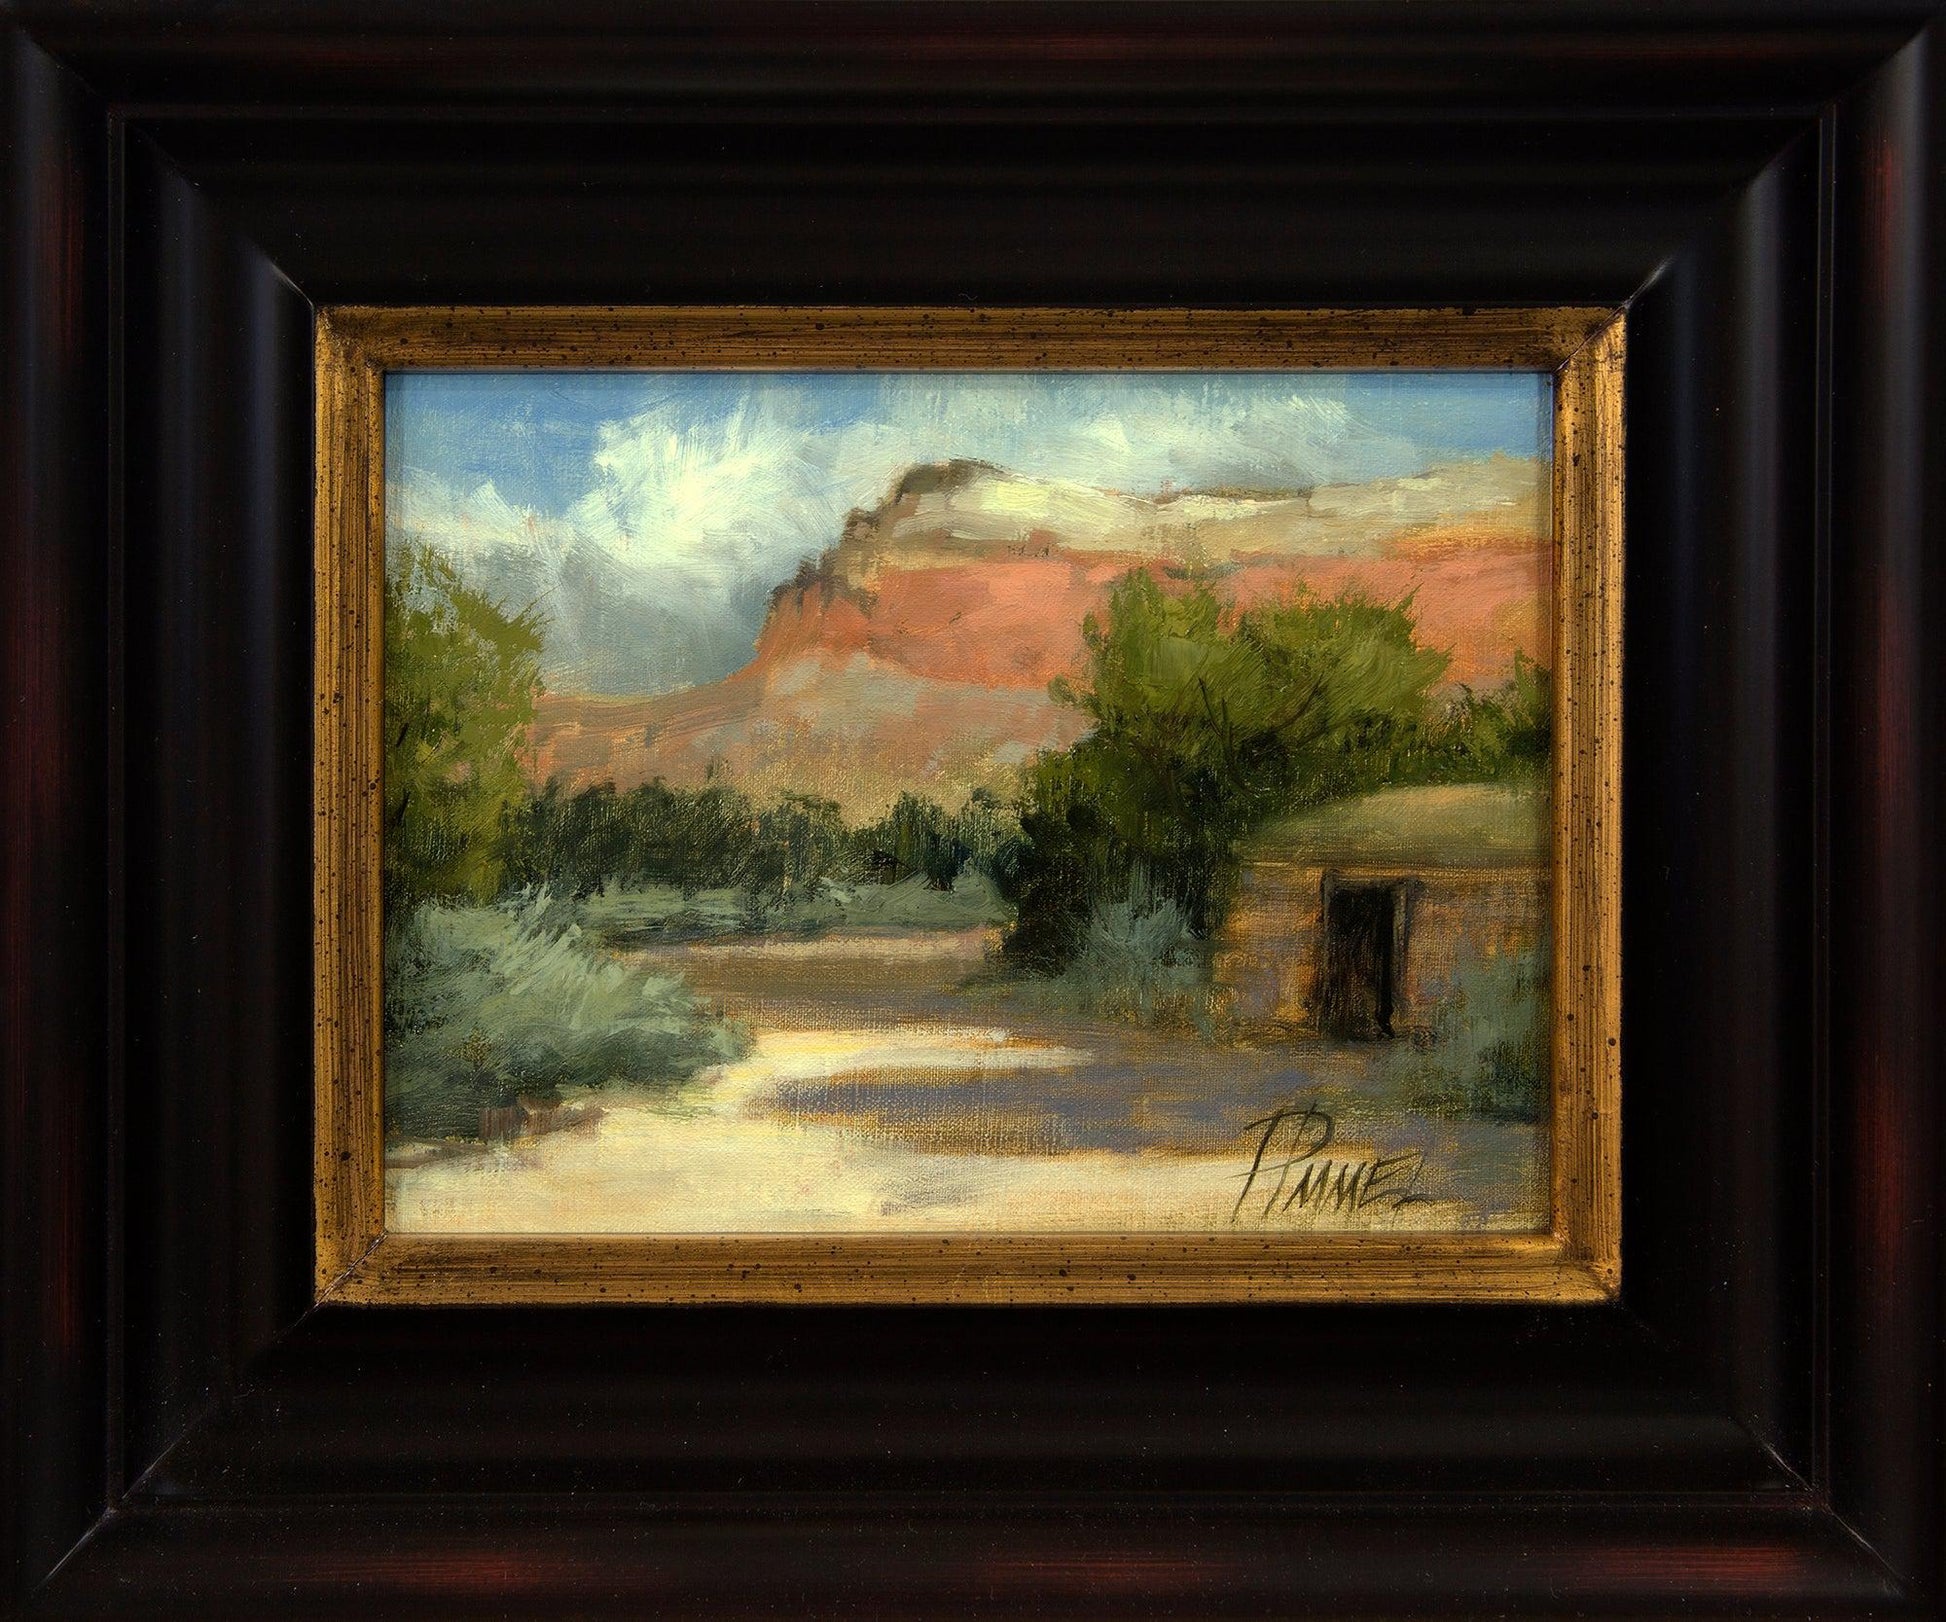 Ghost Ranch Hogan-Painting-Peggy Immel-Sorrel Sky Gallery